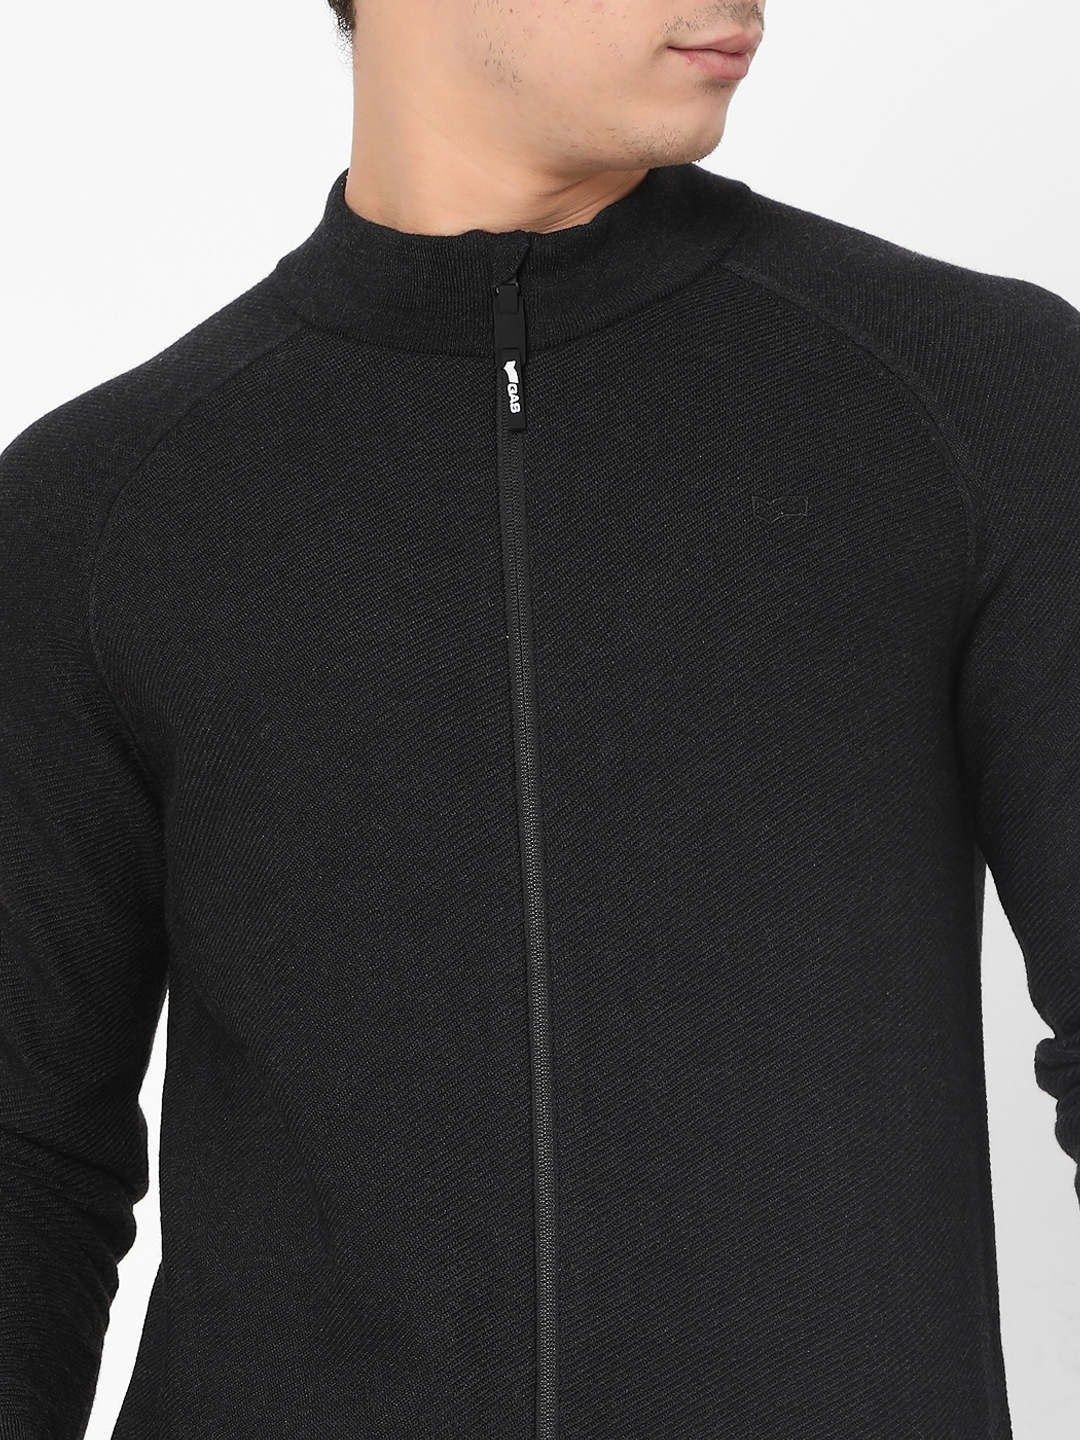 Peter Slim Fit Zip-Front Sweater with Raglan Sleeves